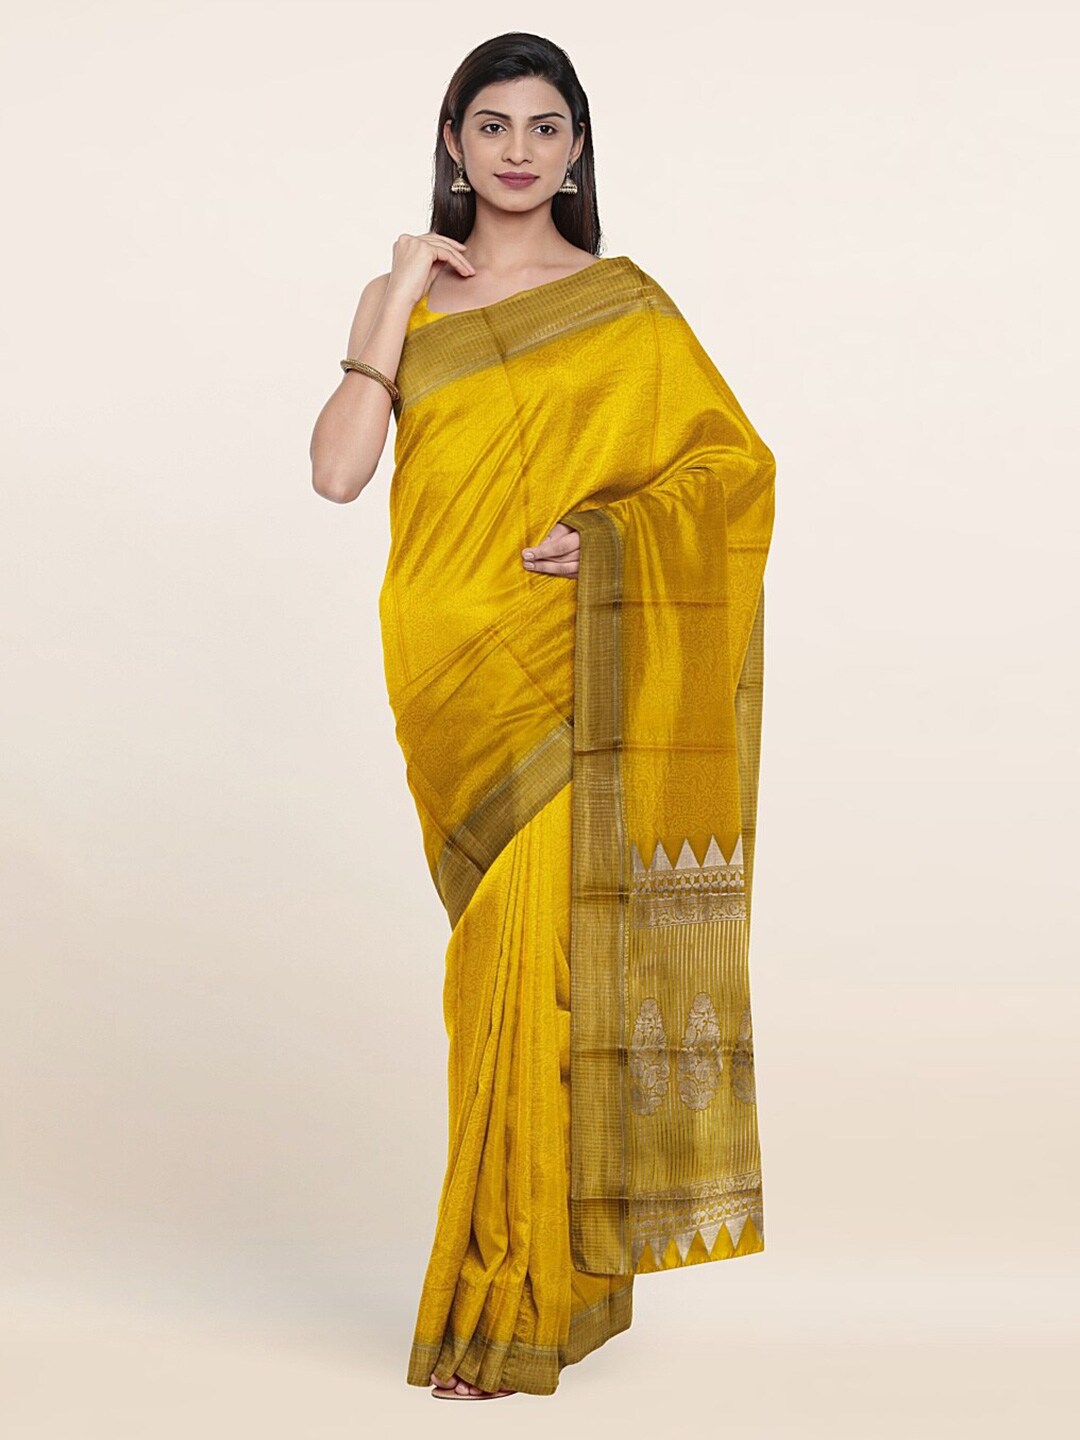 Pothys Yellow & Gold-Toned Ethnic Motifs Zari Pure Silk Saree Price in India